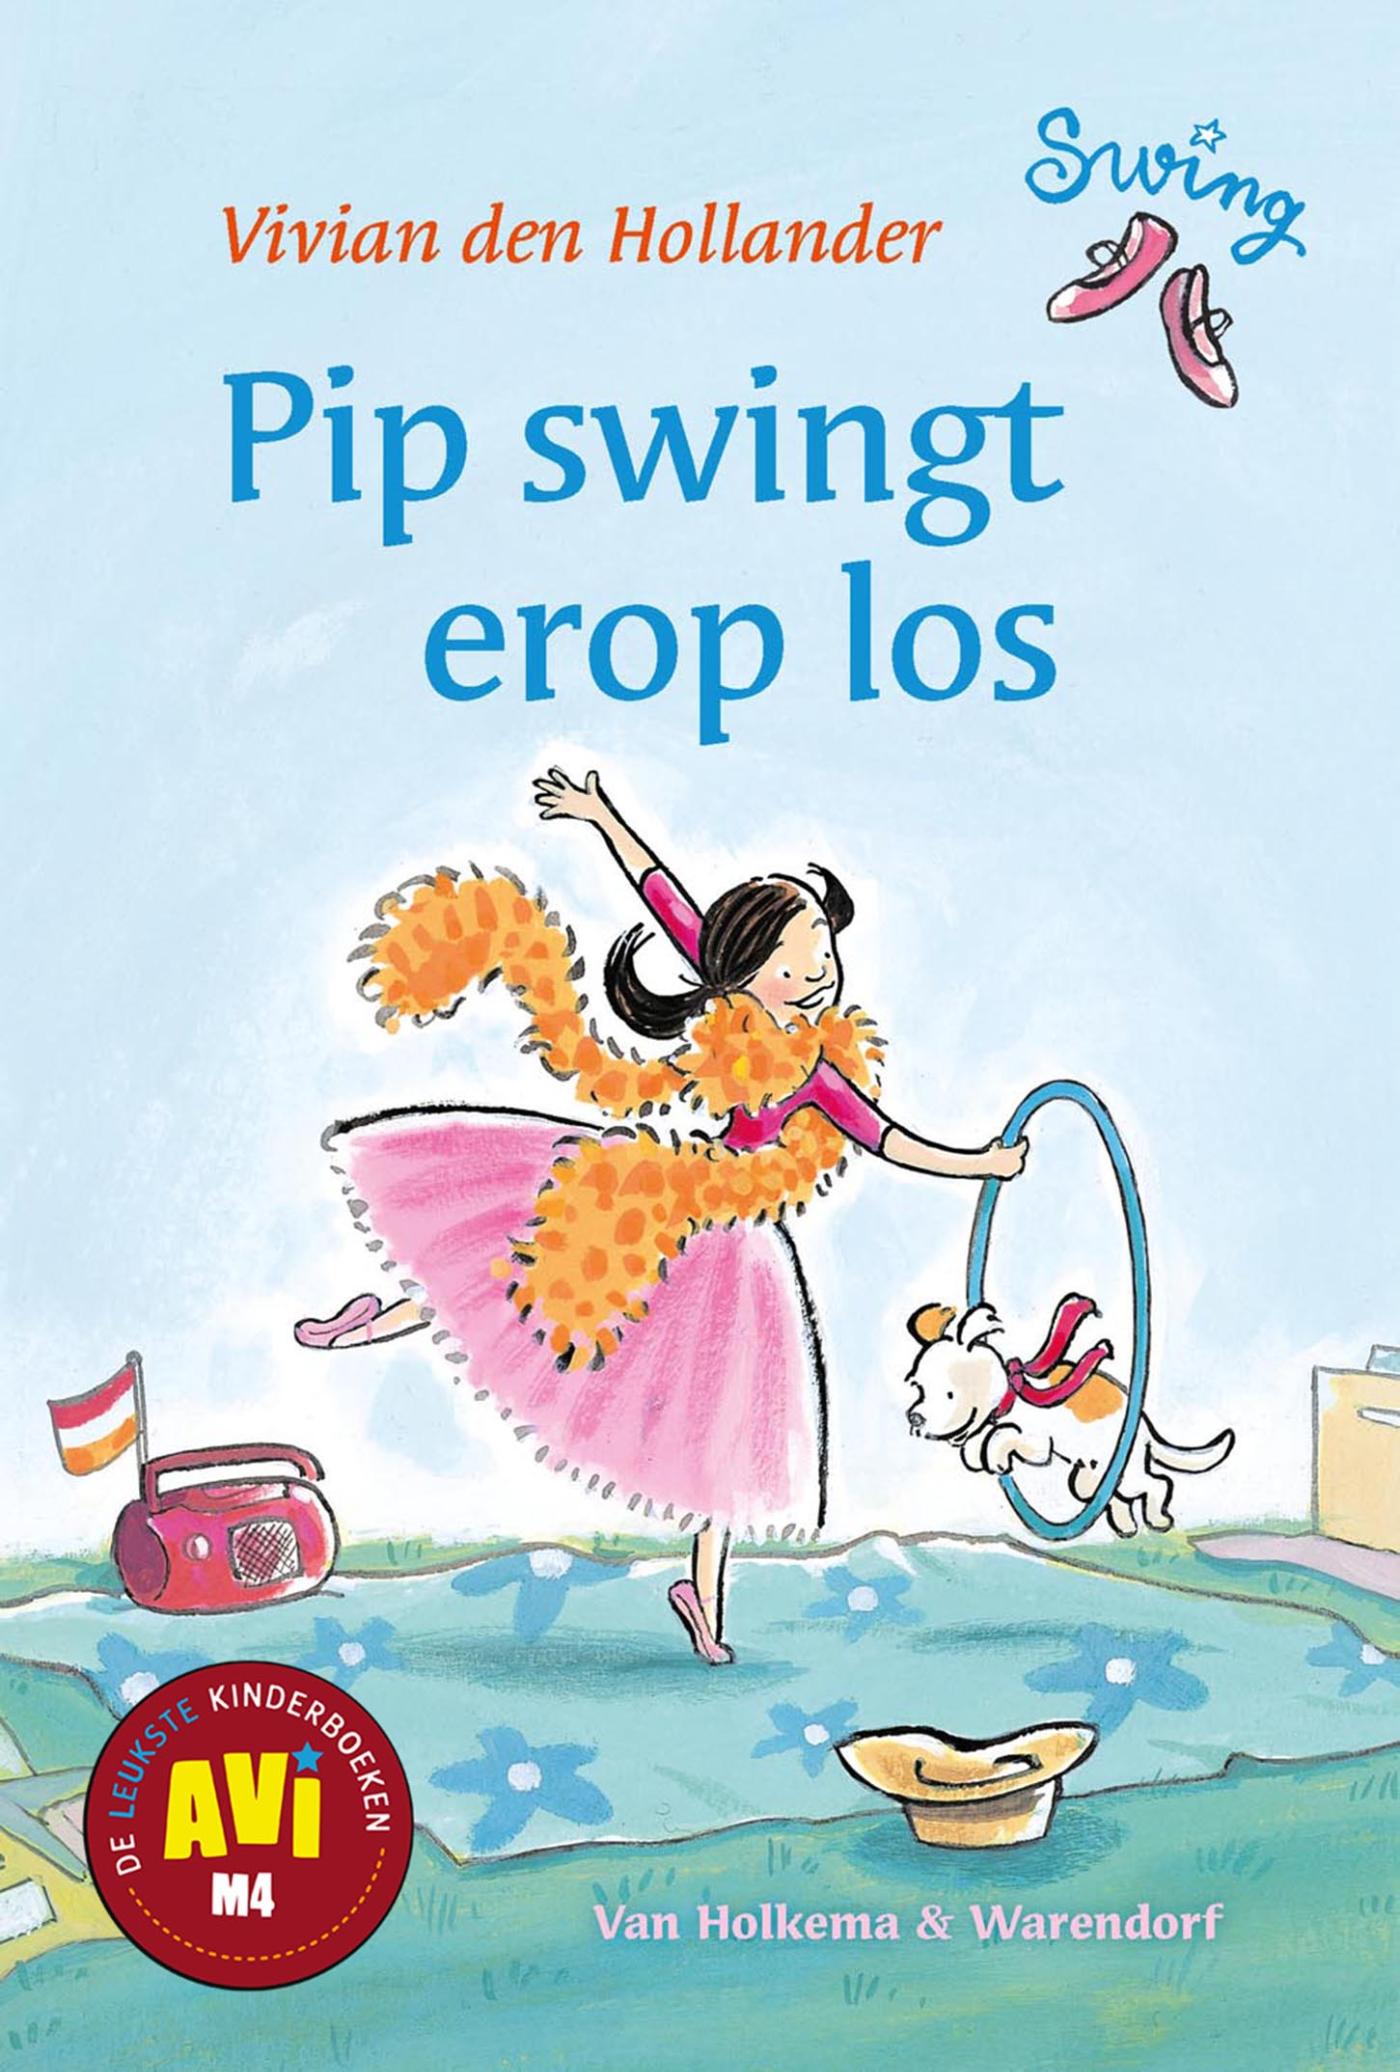 Pip swingt er op los (Ebook)